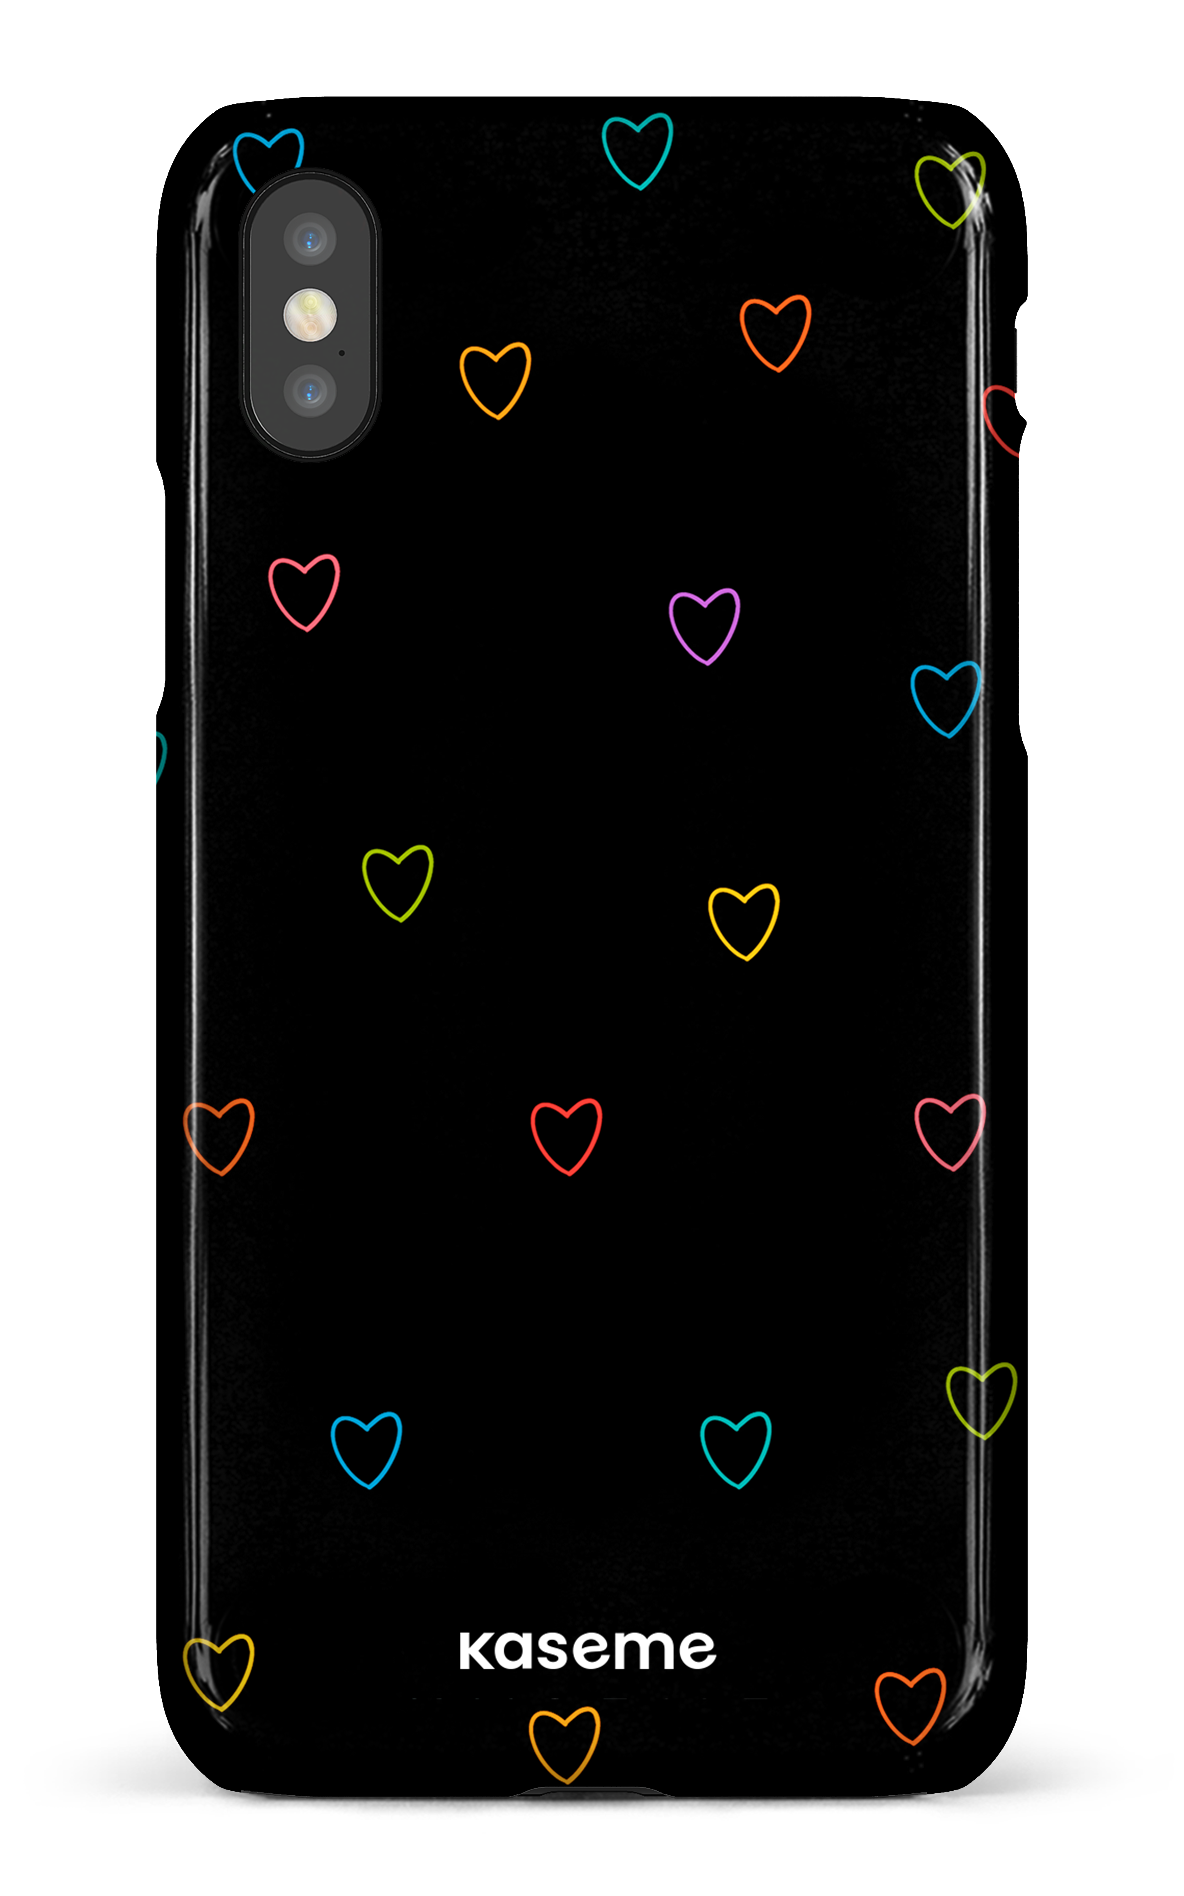 Love Wins - iPhone X/XS